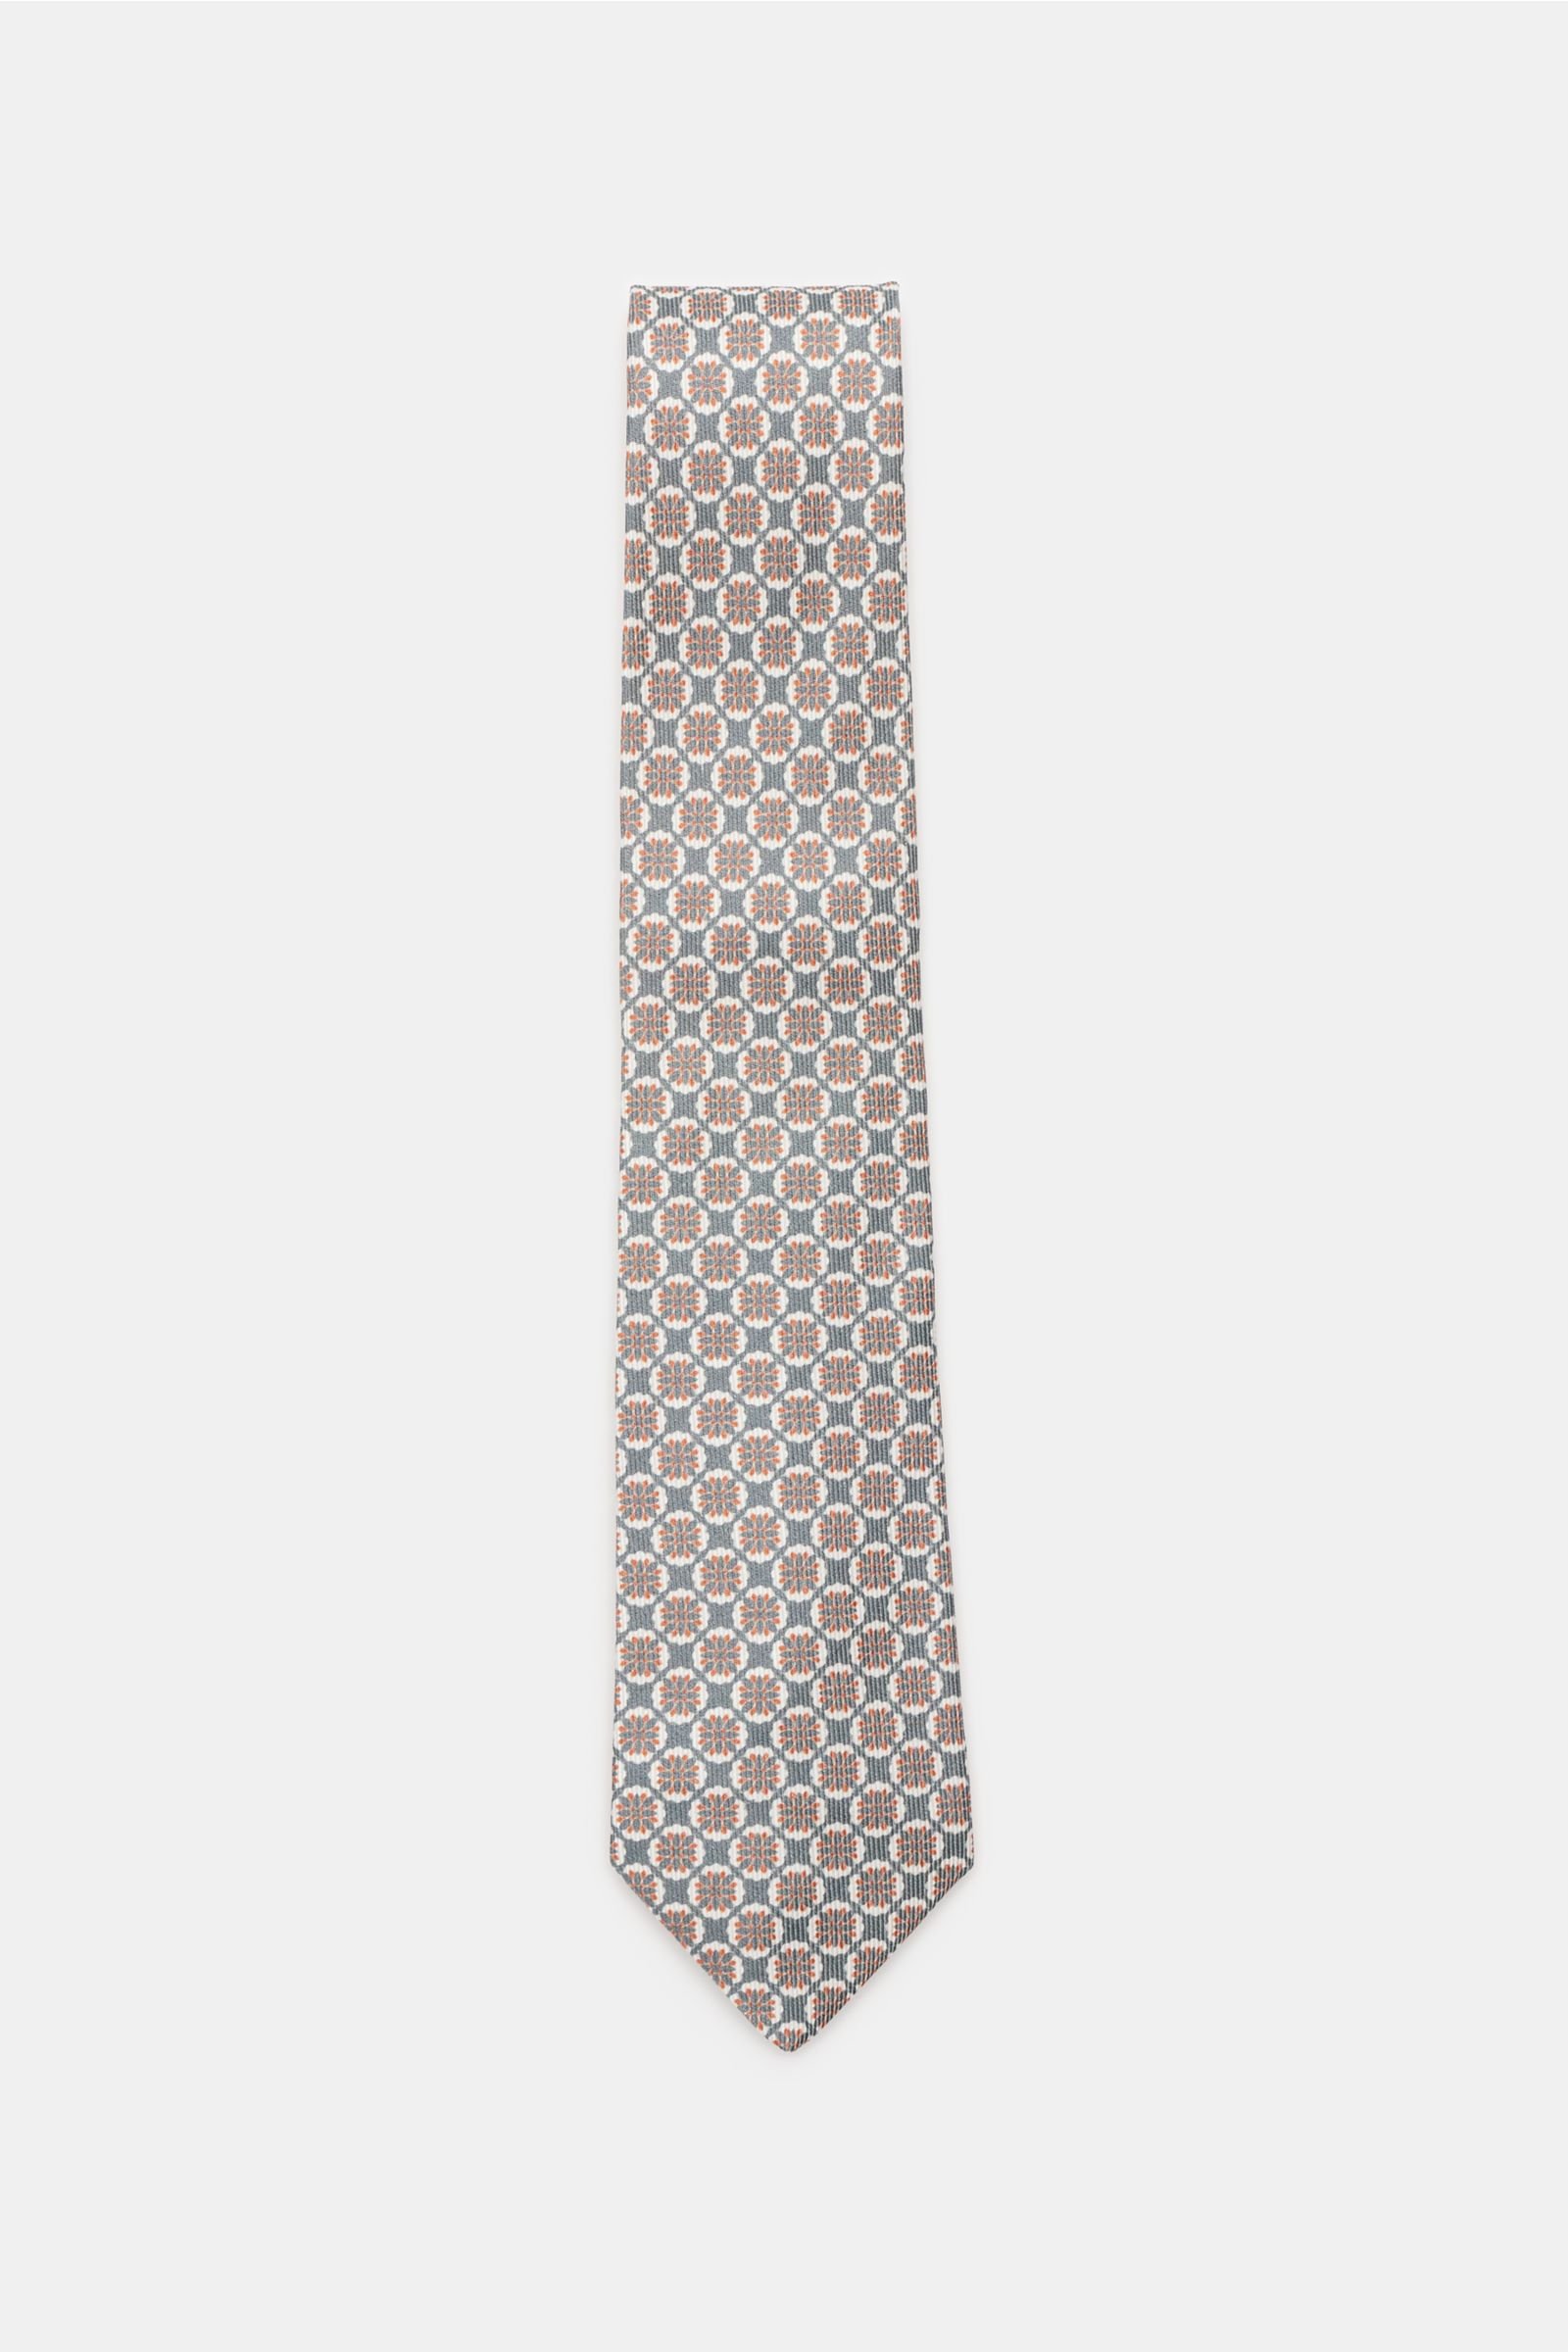 Krawatte graugrün/orange gemustert